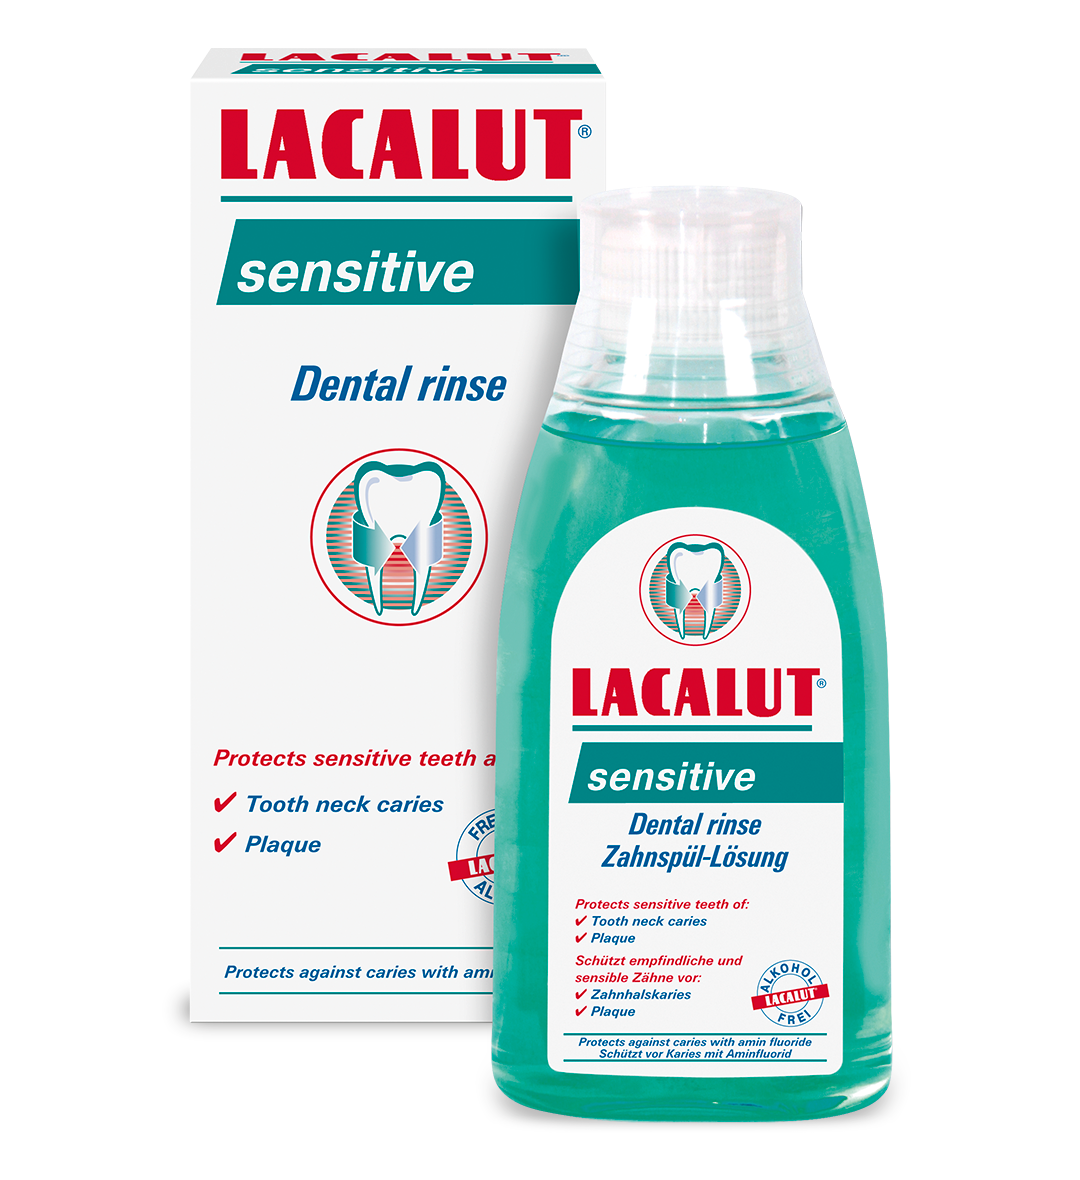 LACALUT® sensitive Dental rinse